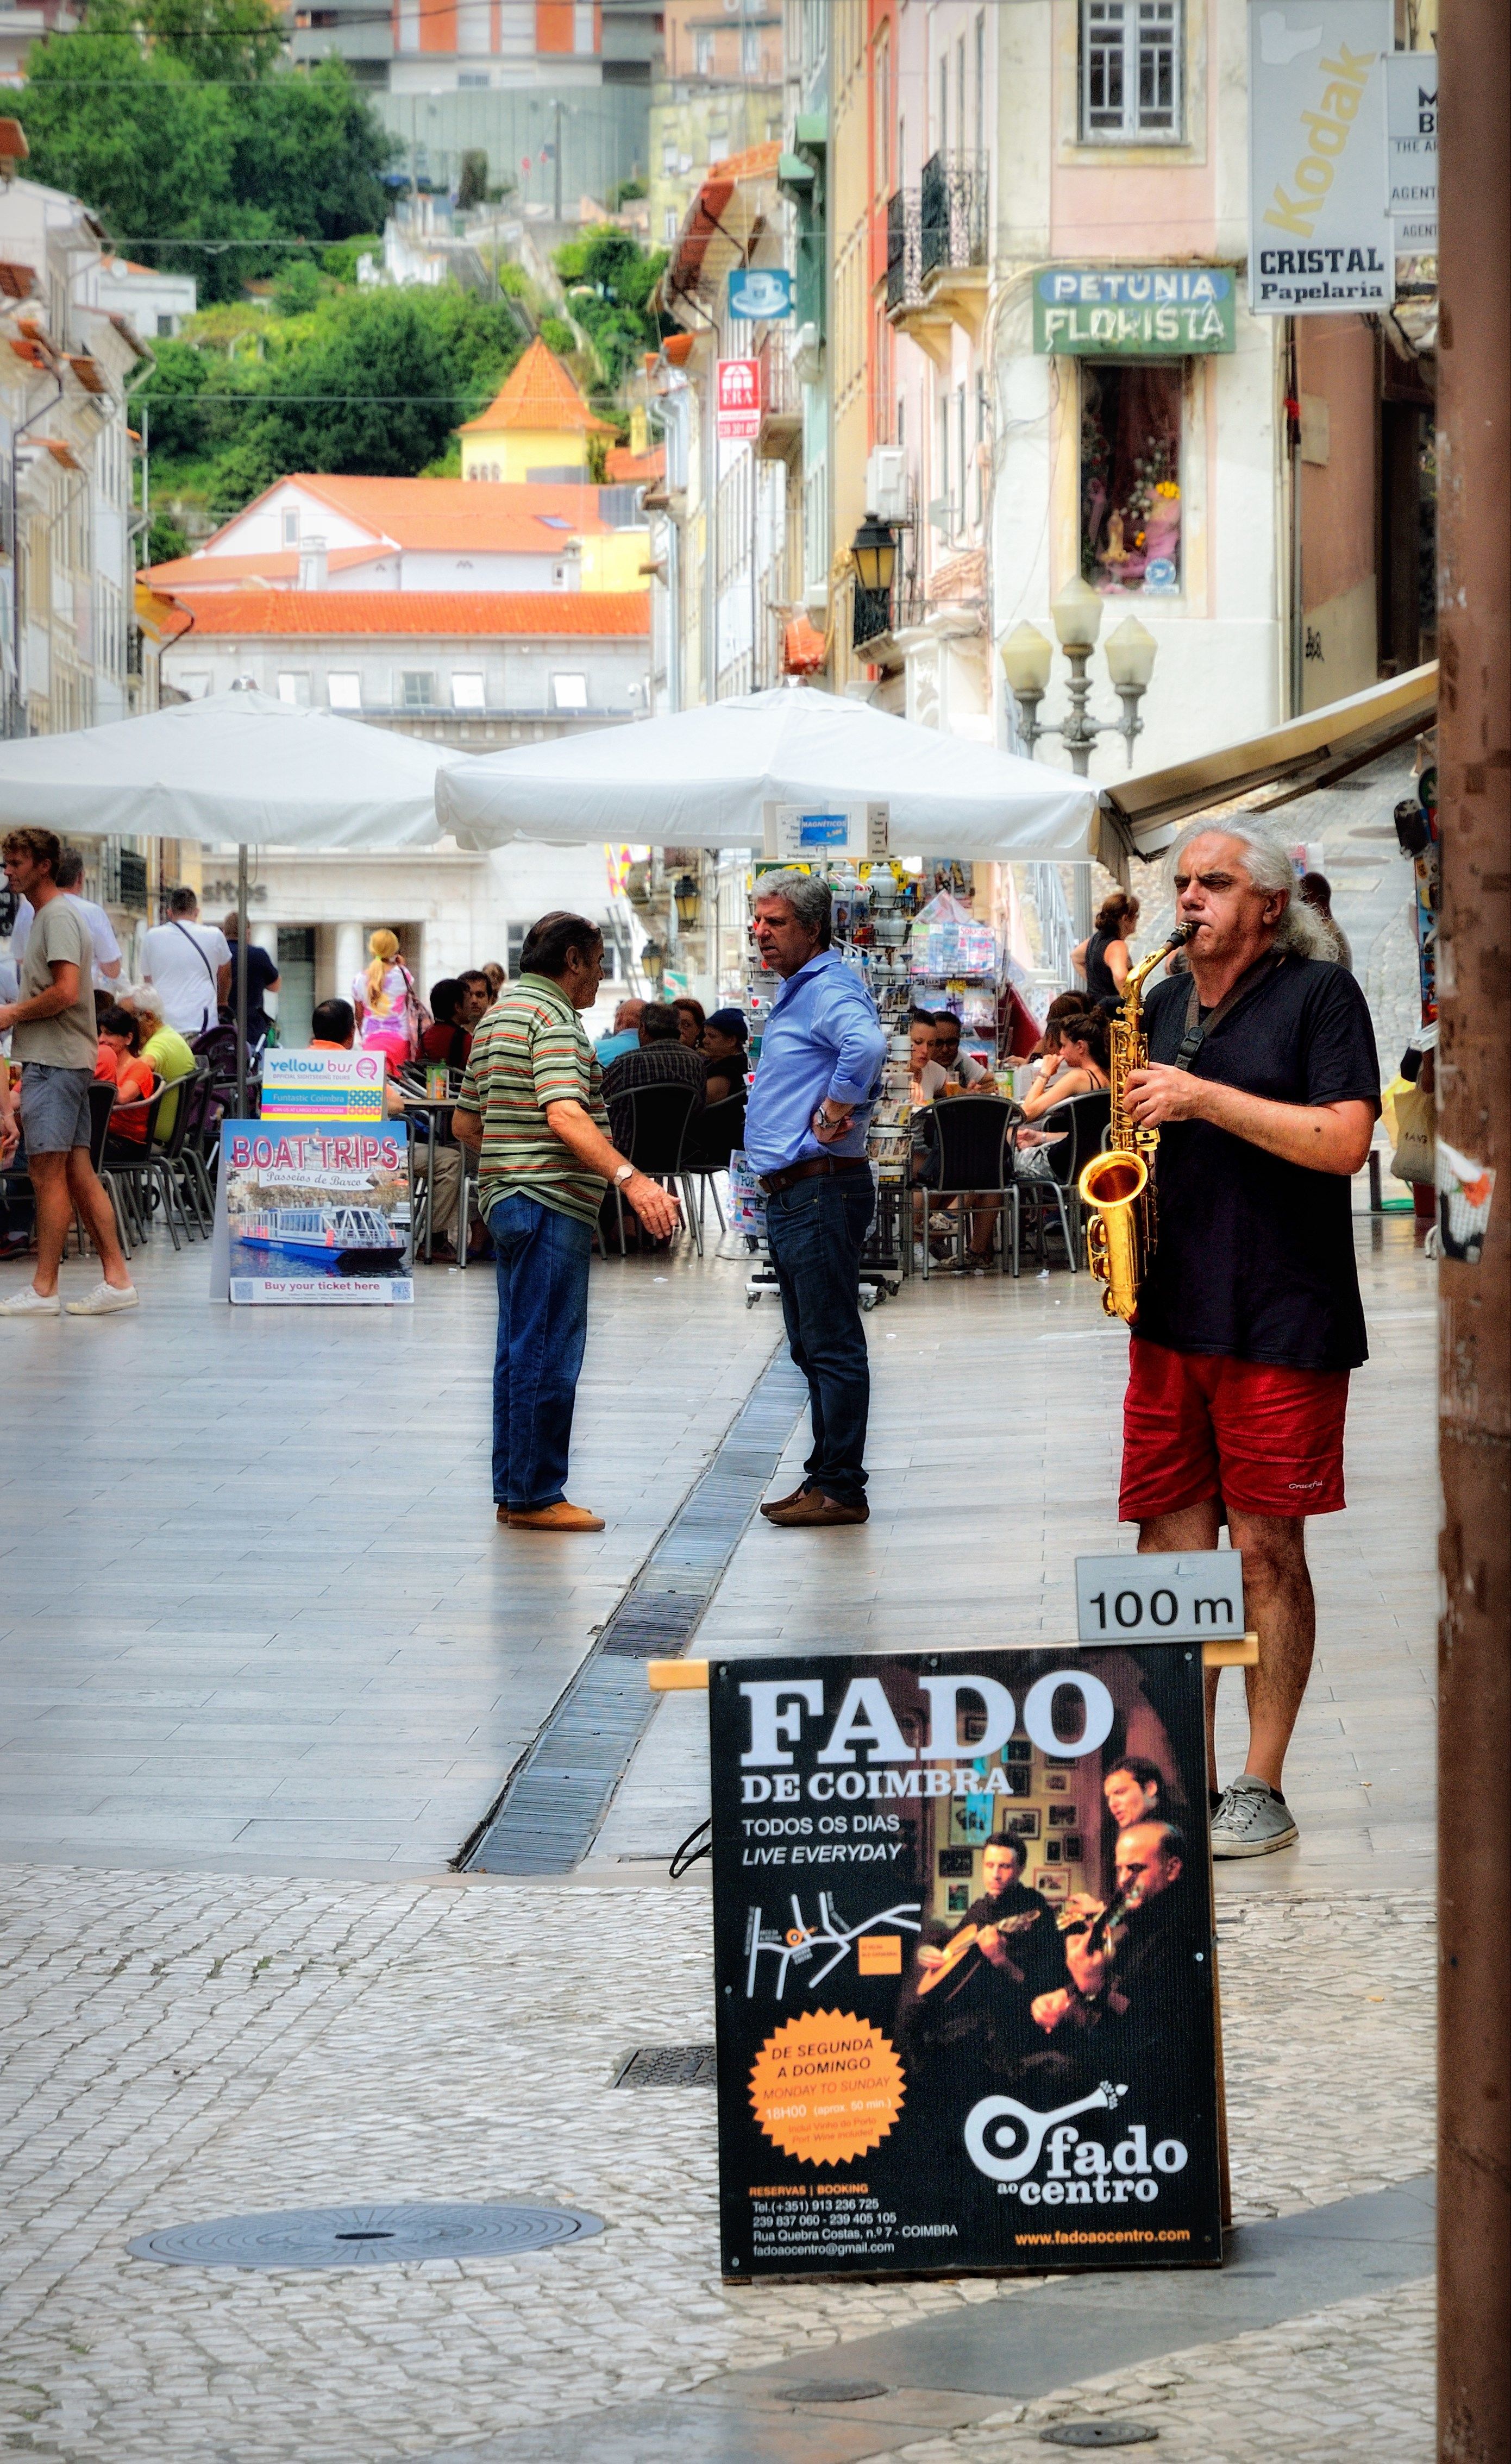 Le fado, l'âme du Portugal